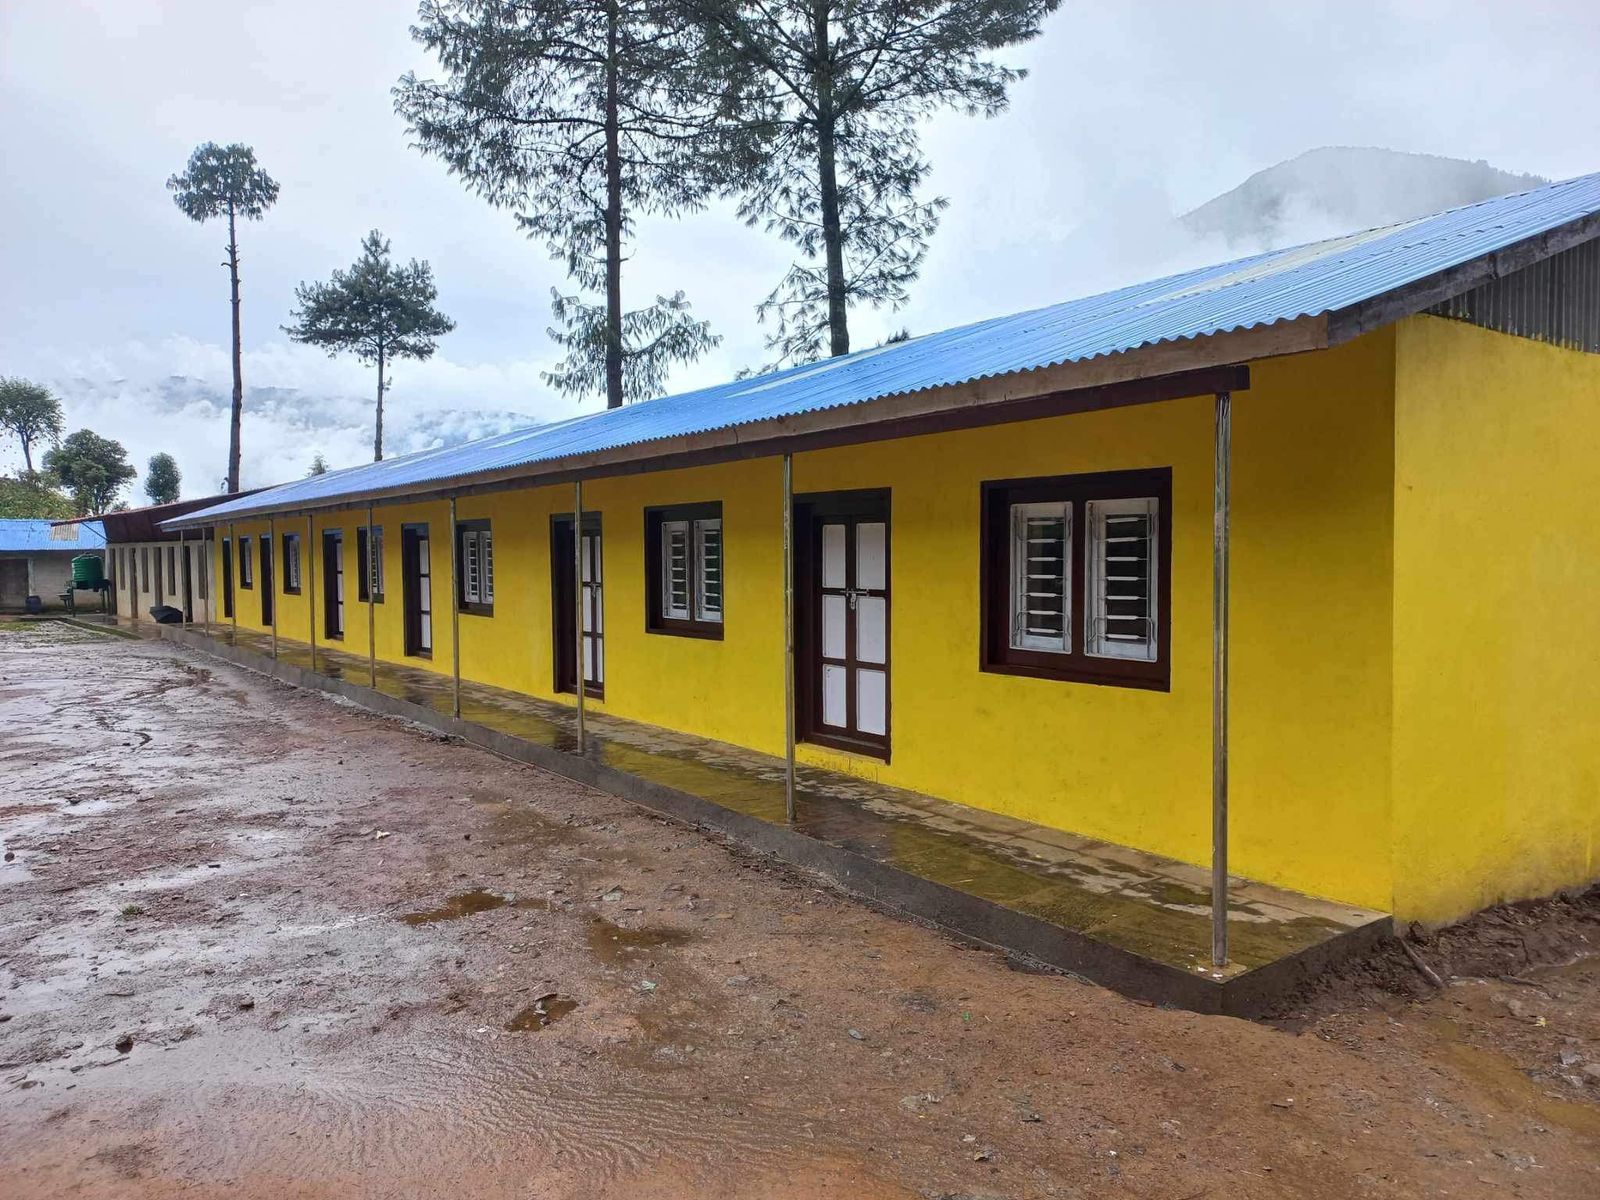 Leeds agency pays for school rebuild in Nepal